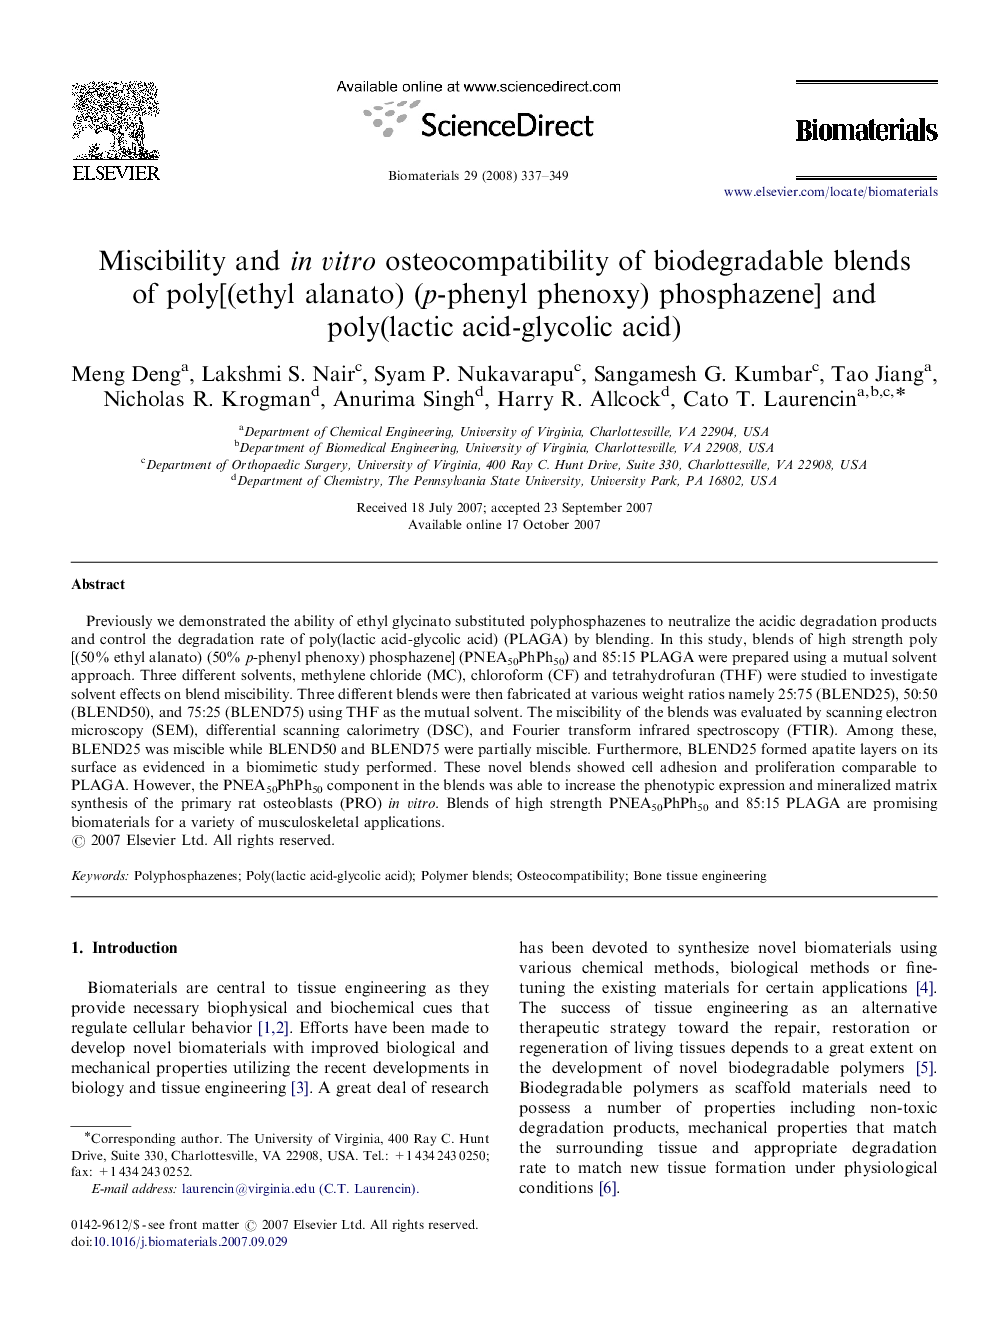 Miscibility and in vitro osteocompatibility of biodegradable blends of poly[(ethyl alanato) (p-phenyl phenoxy) phosphazene] and poly(lactic acid-glycolic acid)